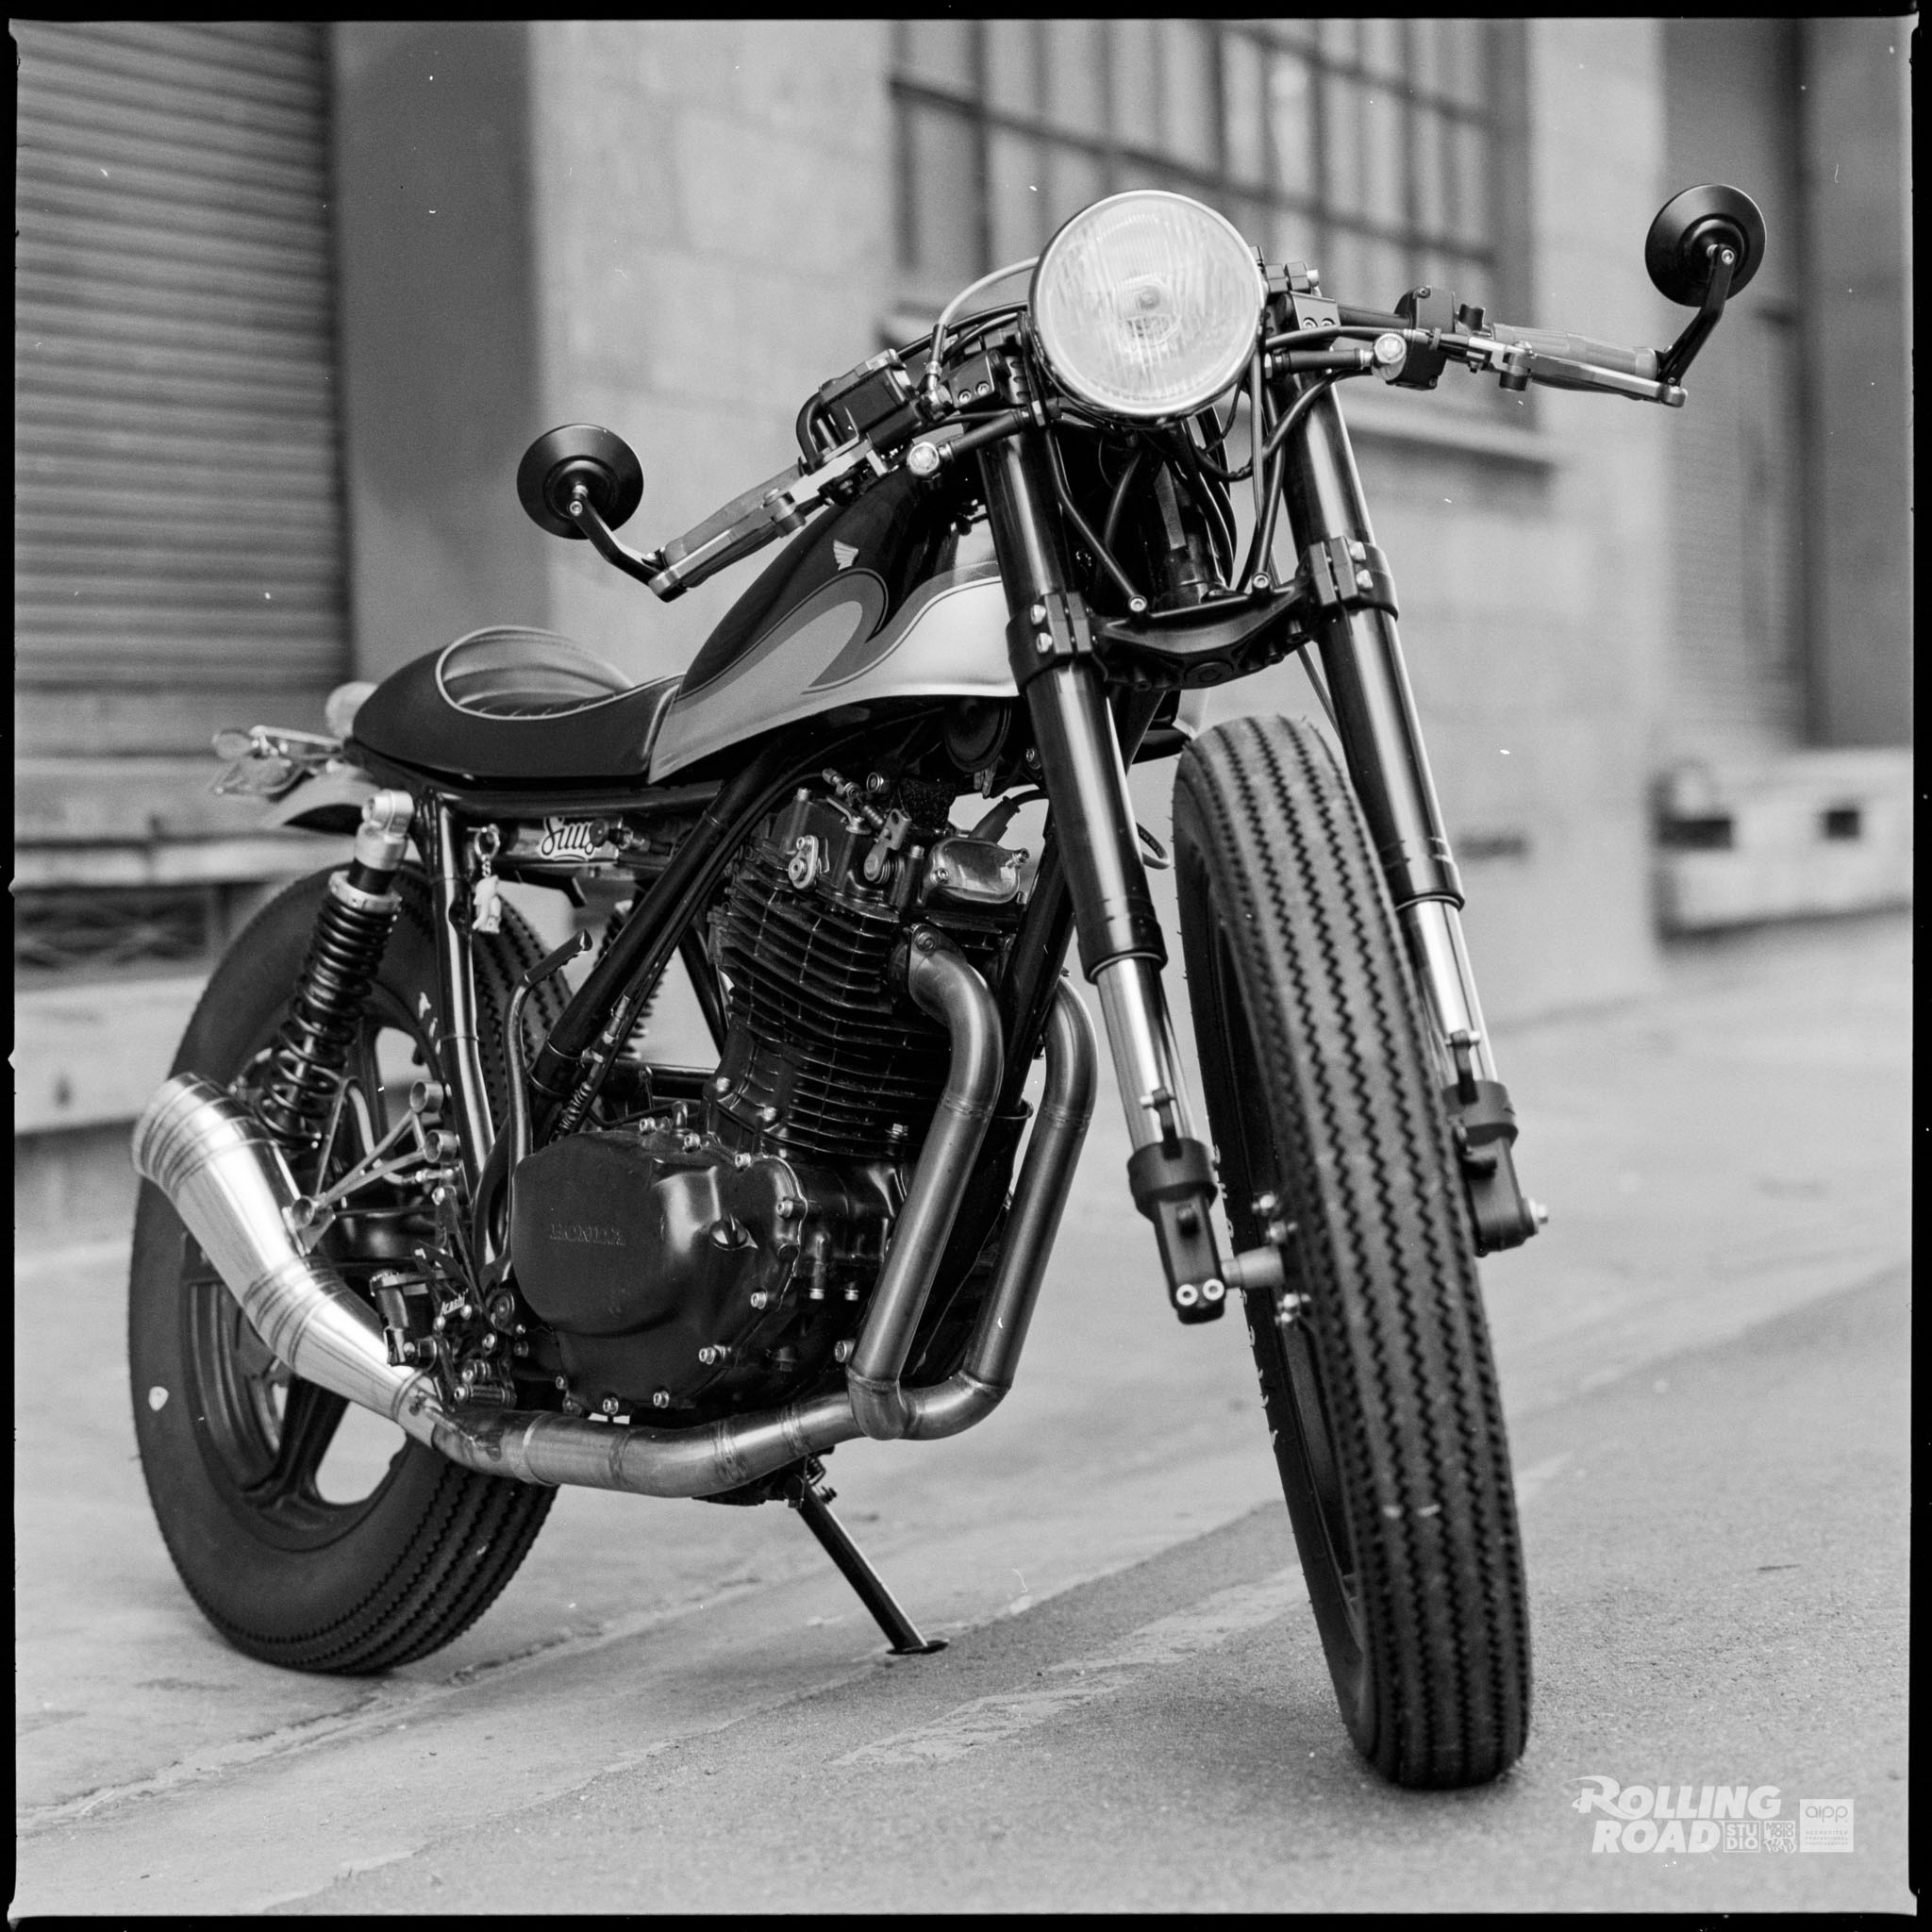 rolling-road-studio-daniel-purvis-photography-motorcycle-004.jpg